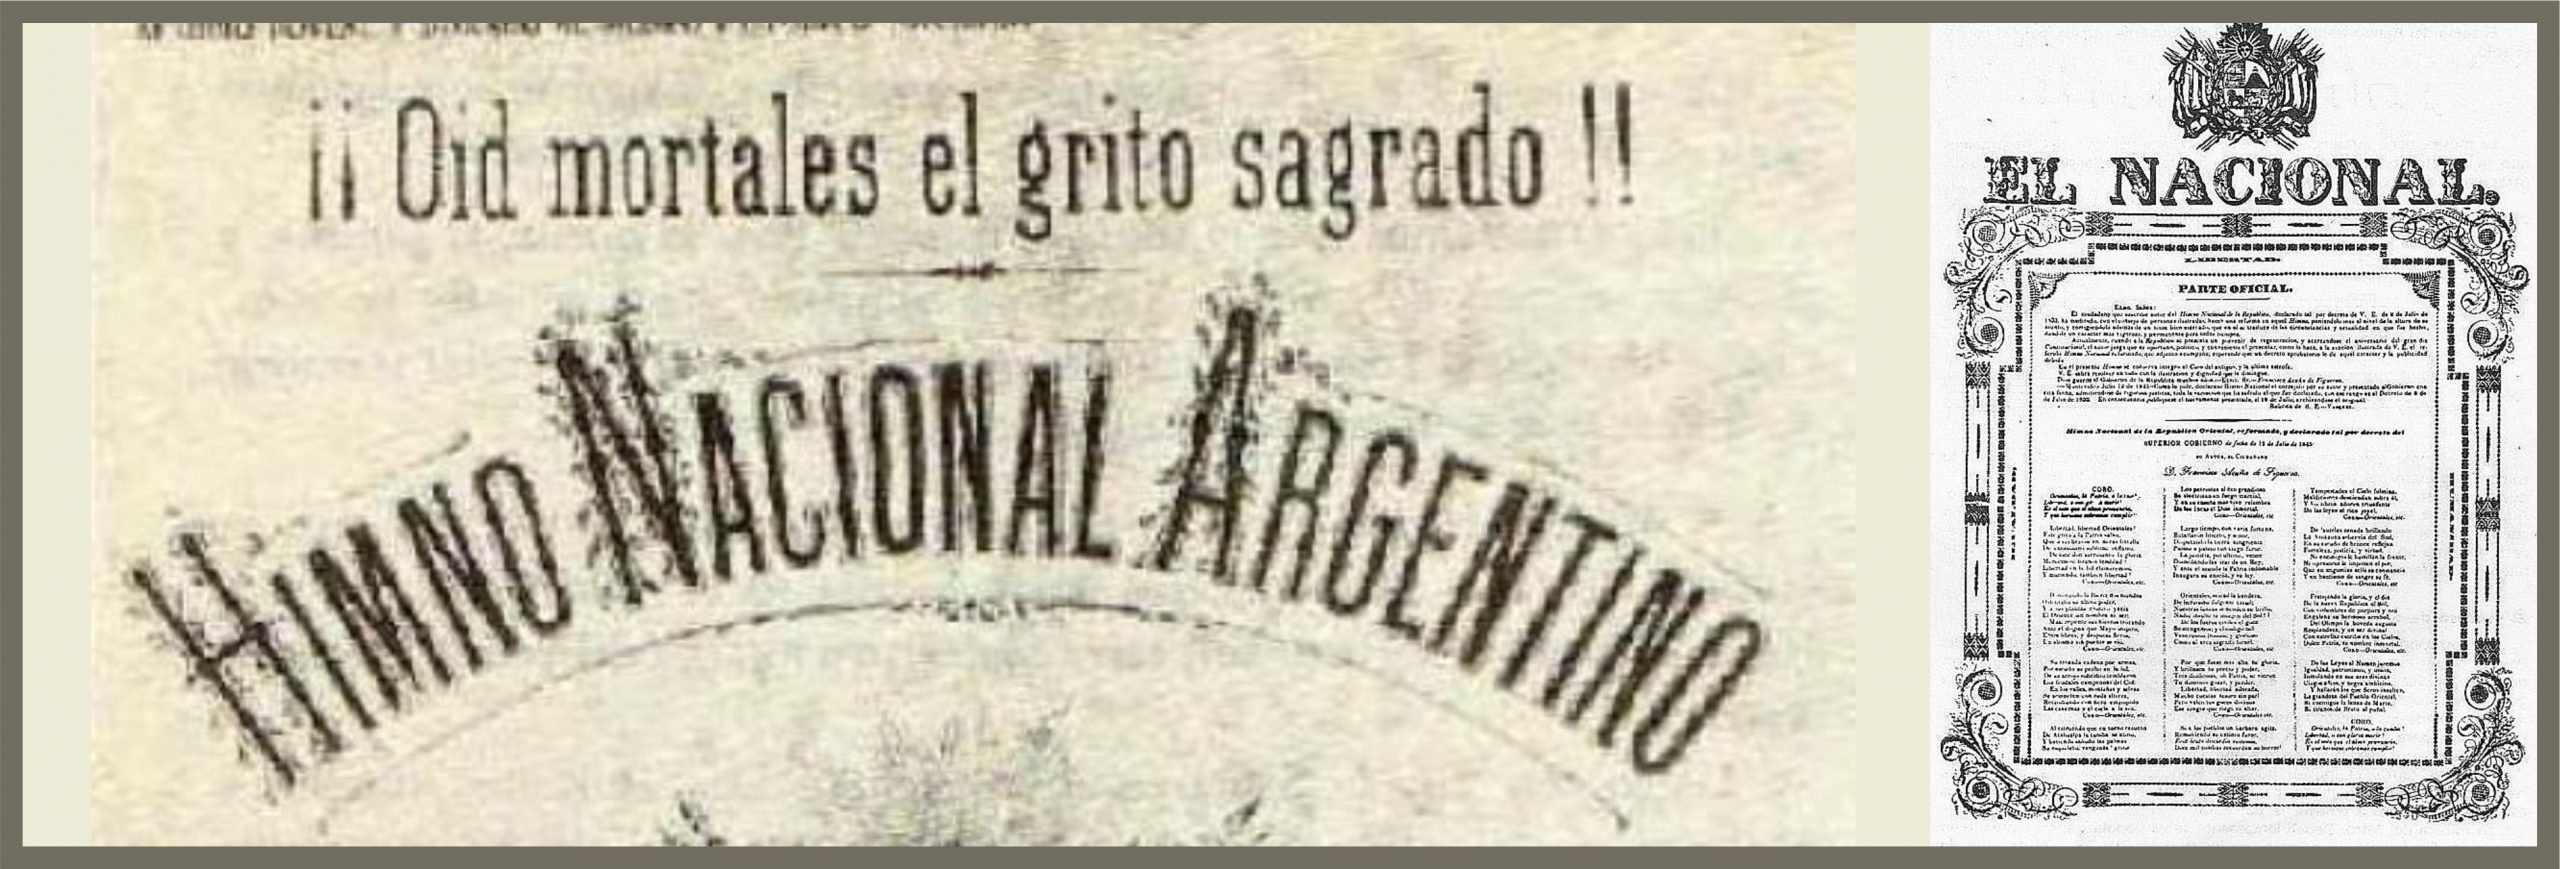 Himno Nacional Argentino, Argentina